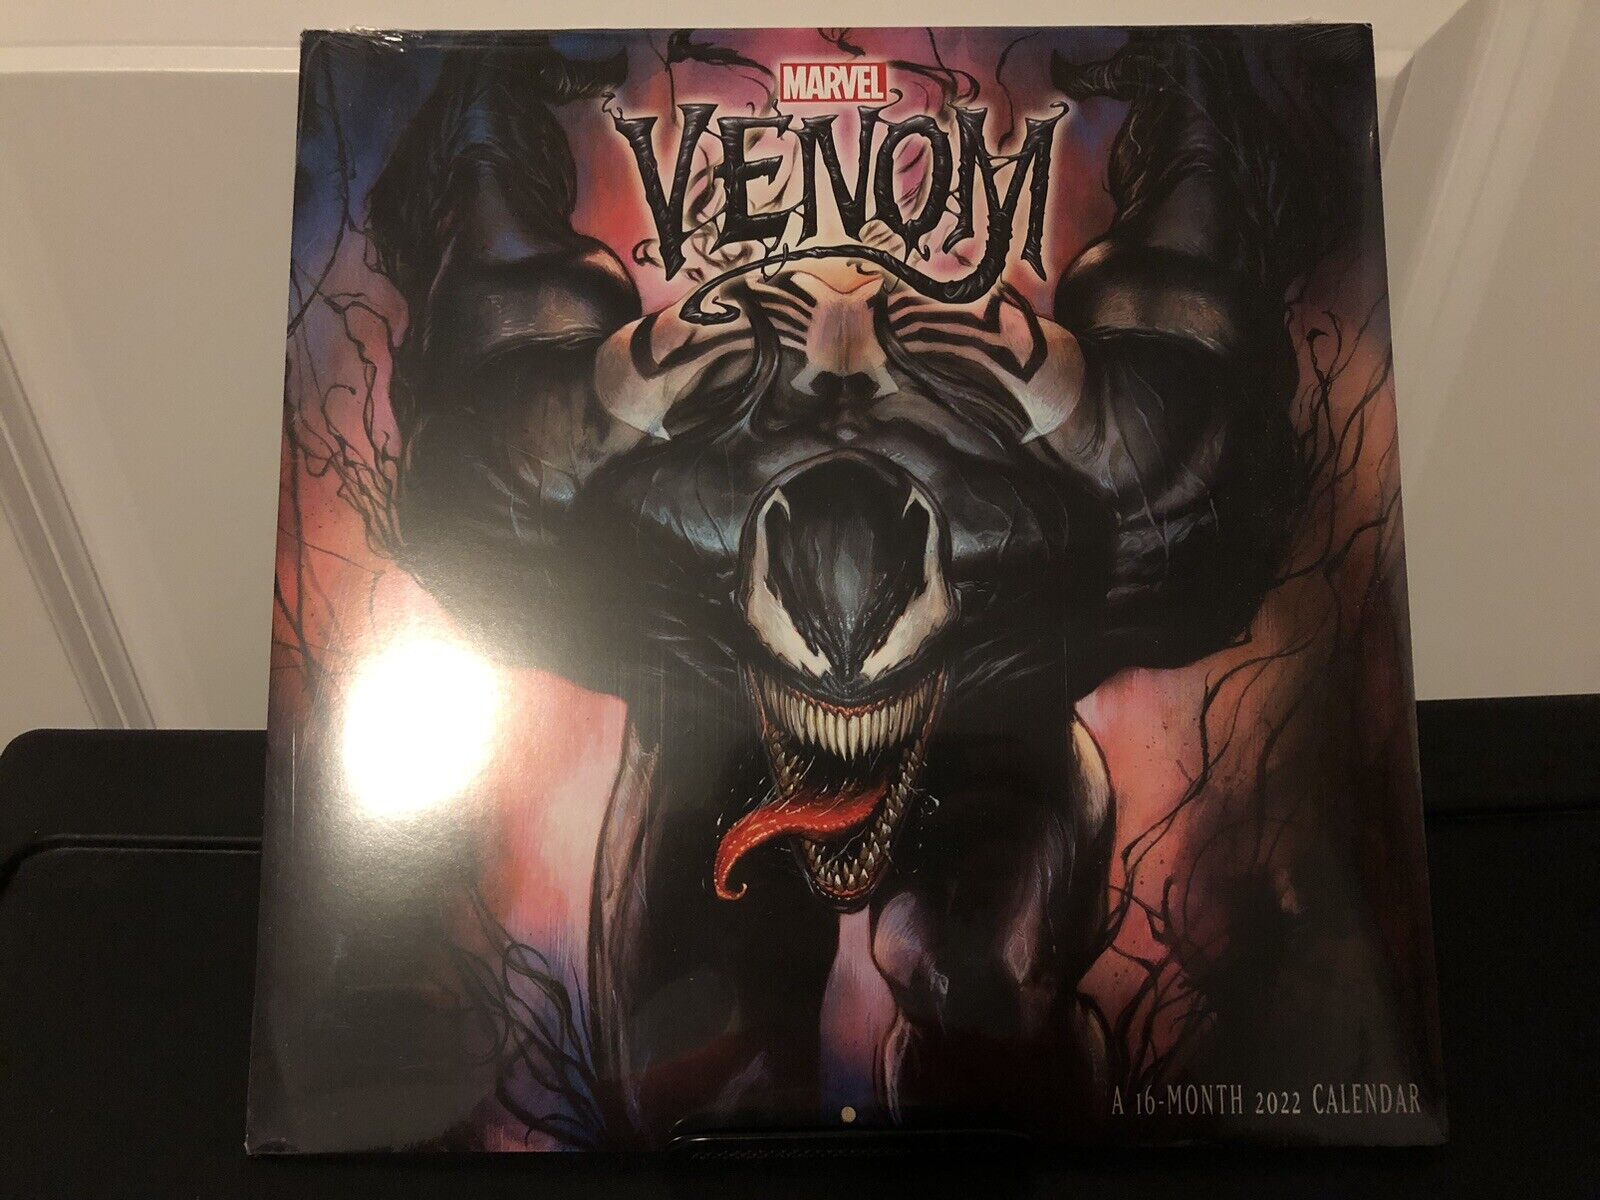 Marvel Comics Venom Comic Art Images 16 Month 2022 Wall Calendar SEALED VHTF